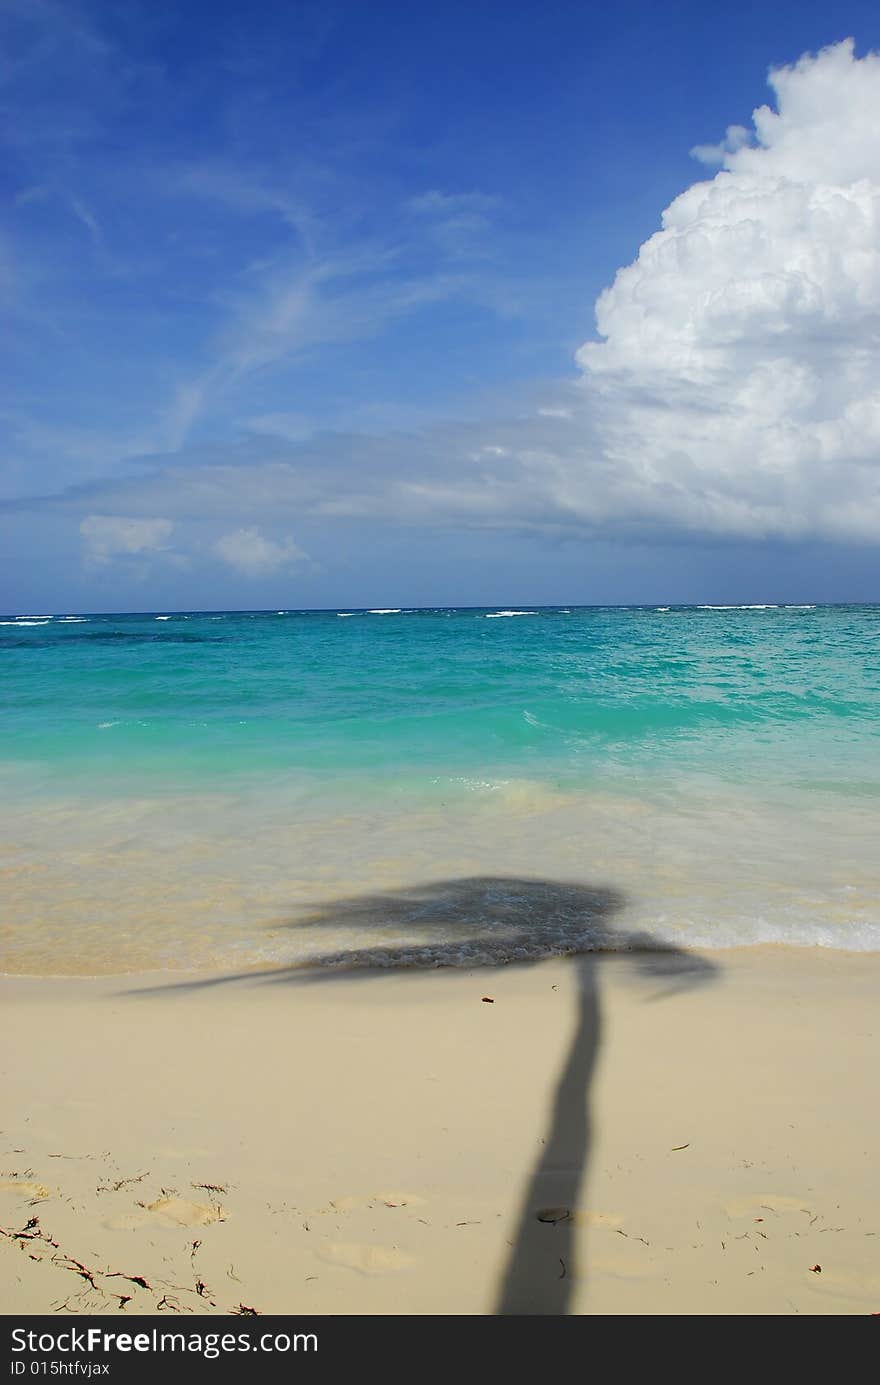 Pristine tropical beach with palm trees shadows on Caribbean island. Colors are natural. Bavaro Beach, Punta Cana